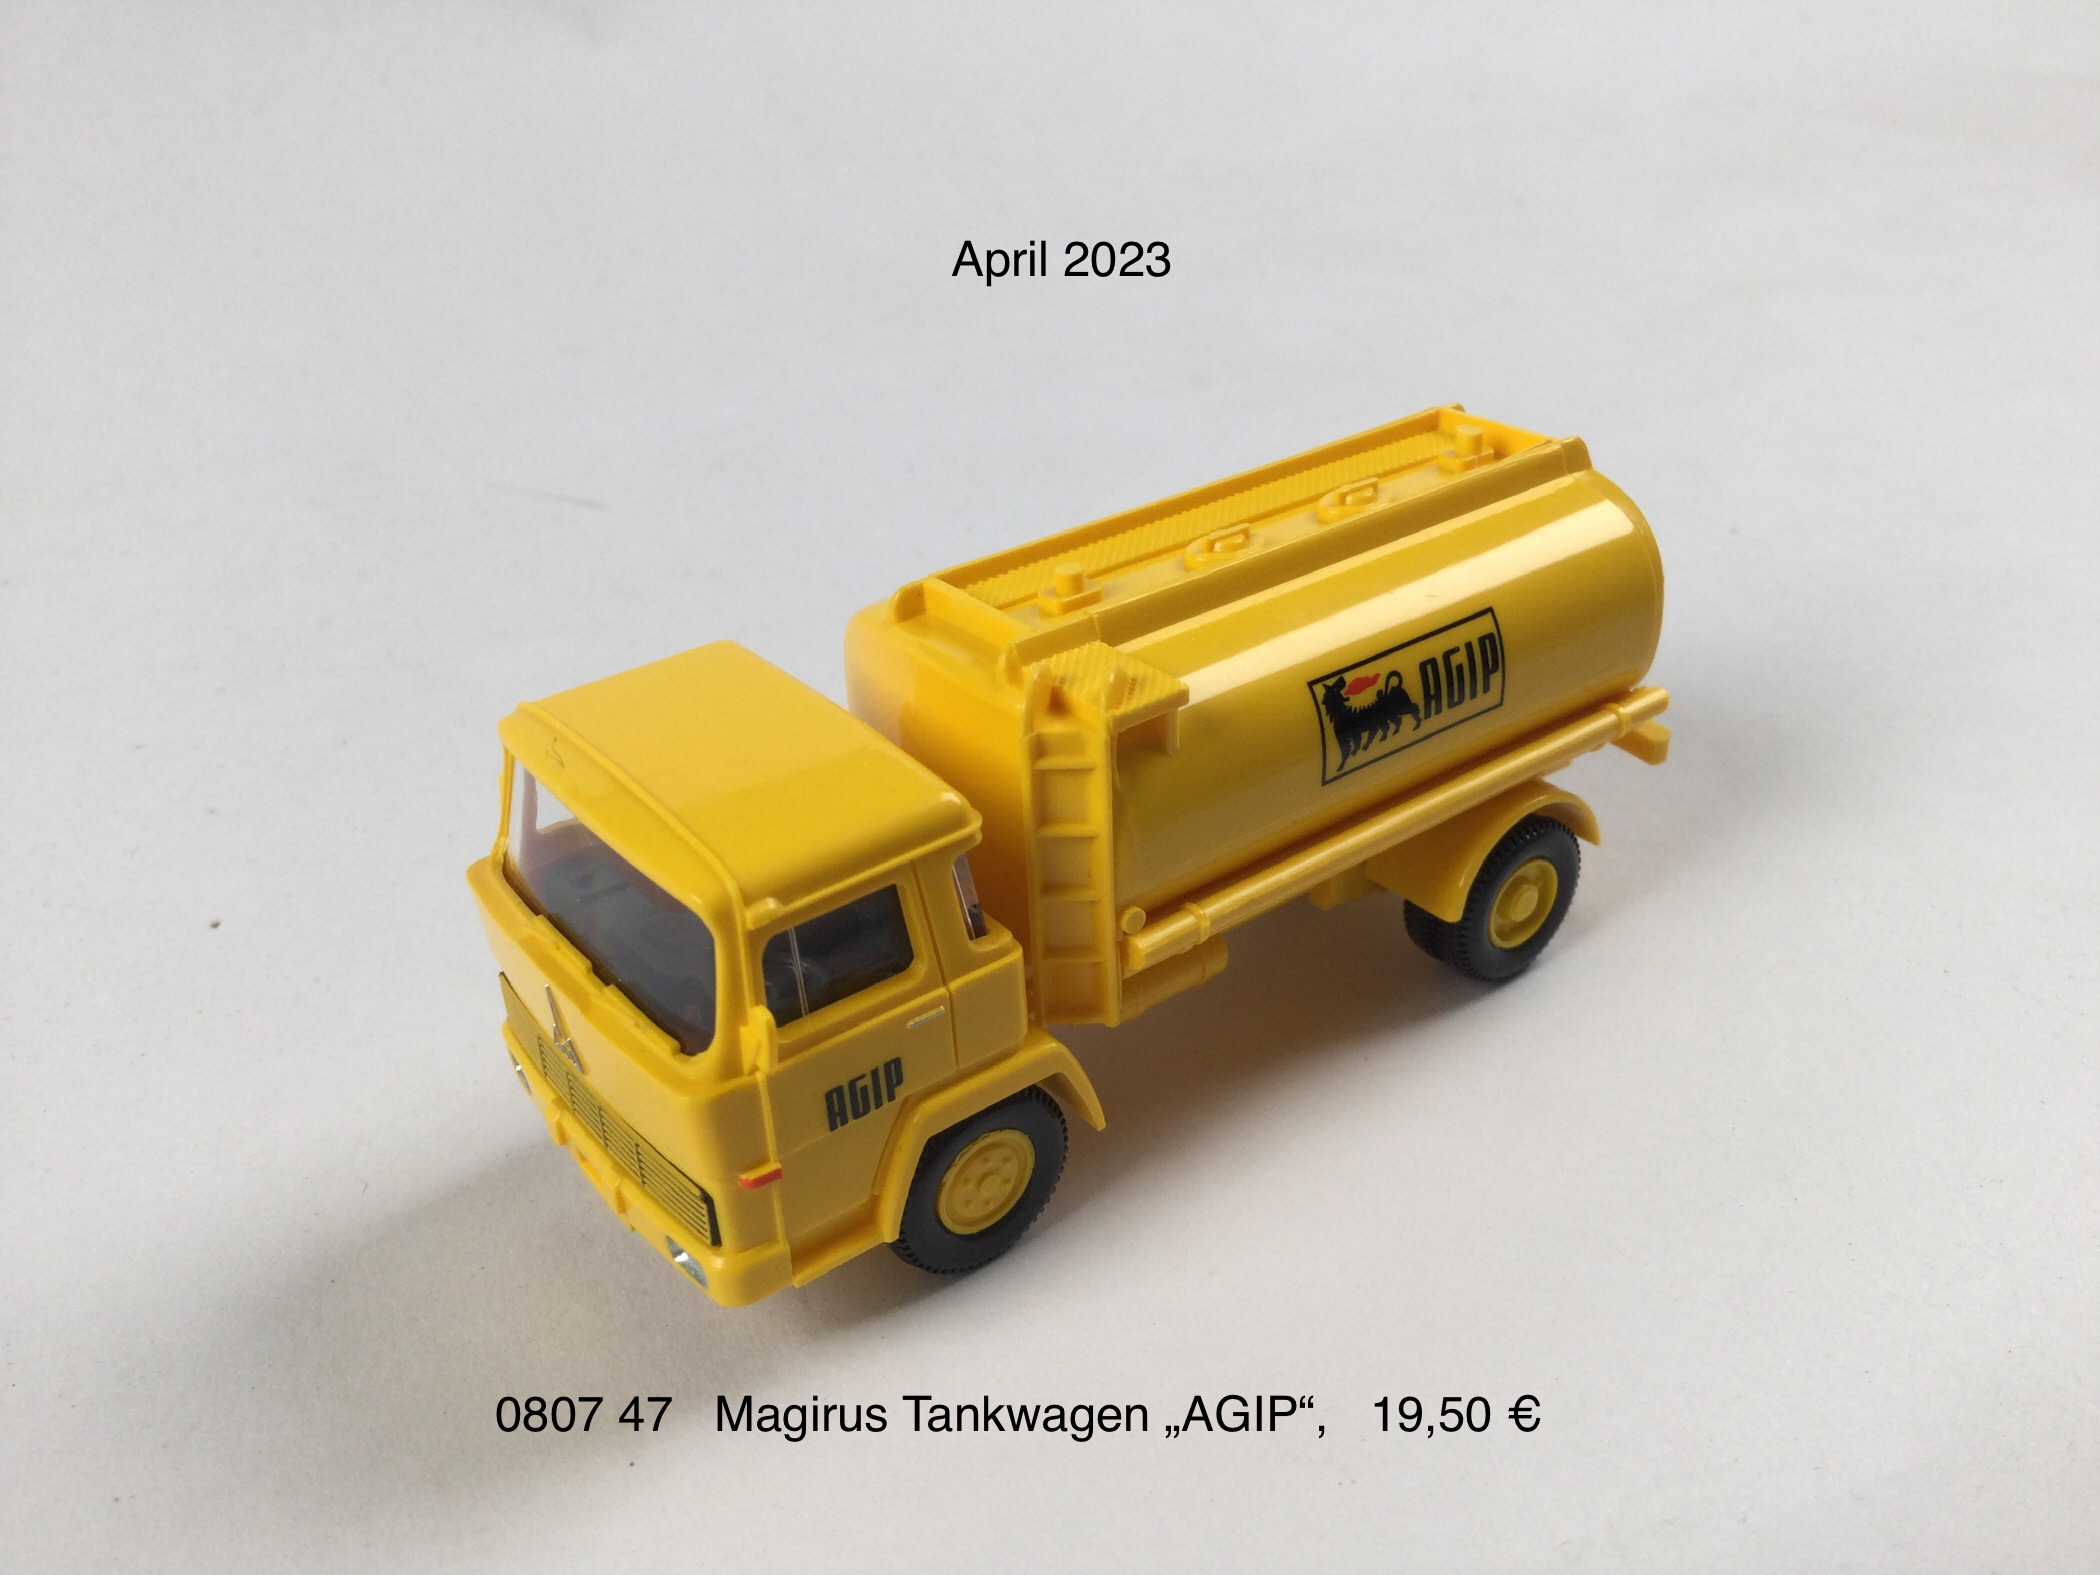 Magirus Tankwagen "Agip"